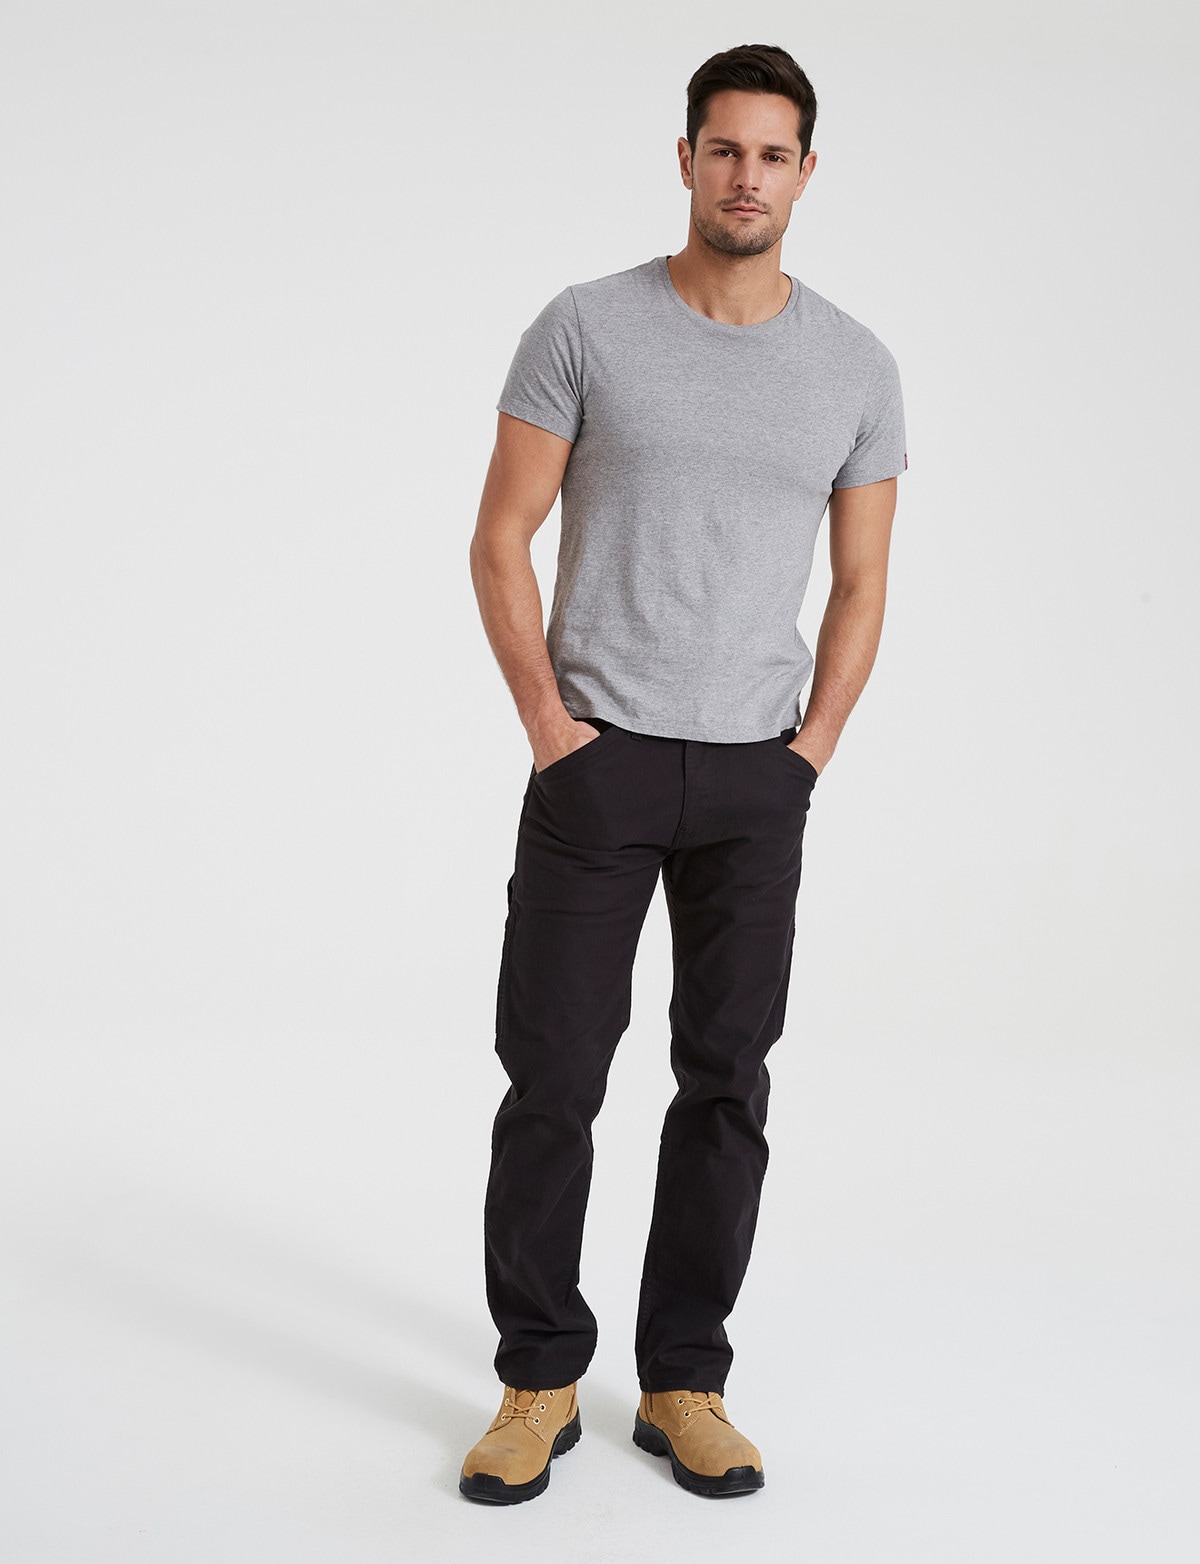 Buy Black Trousers  Pants for Men by LEVIS Online  Ajiocom